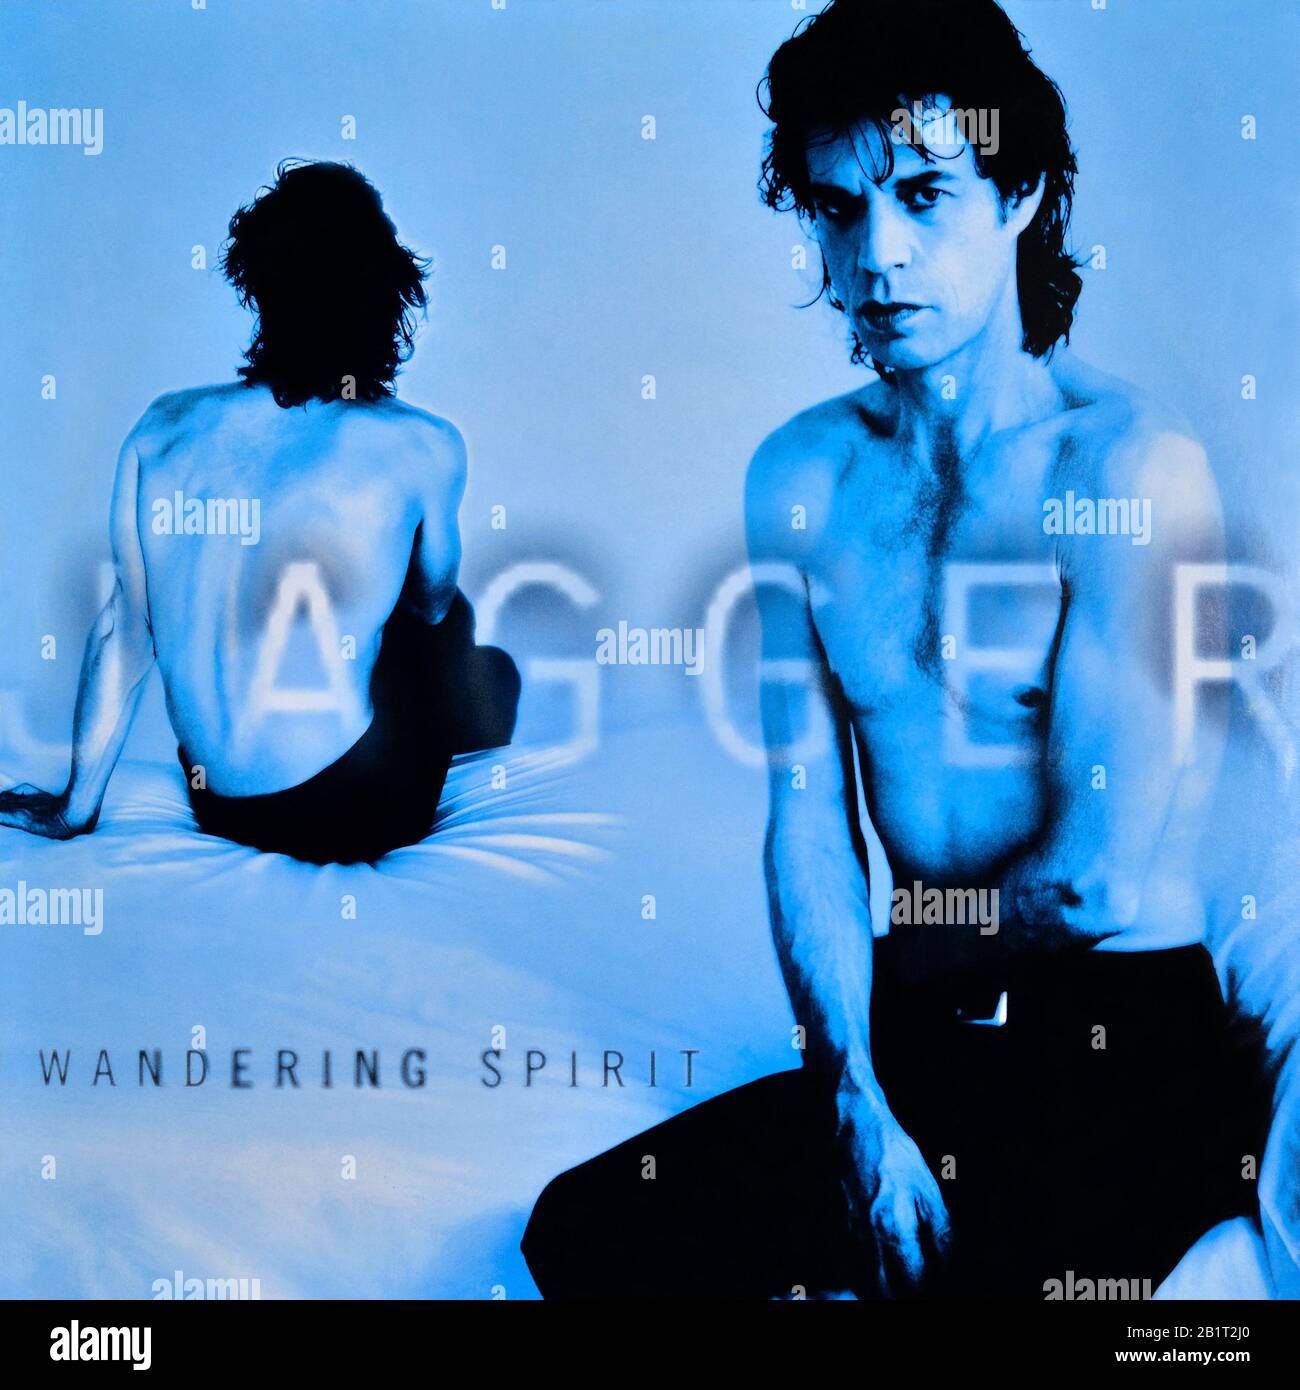 Mick Jagger - original vinyl album cover - Wandering Spirit - 1993 Stock Photo